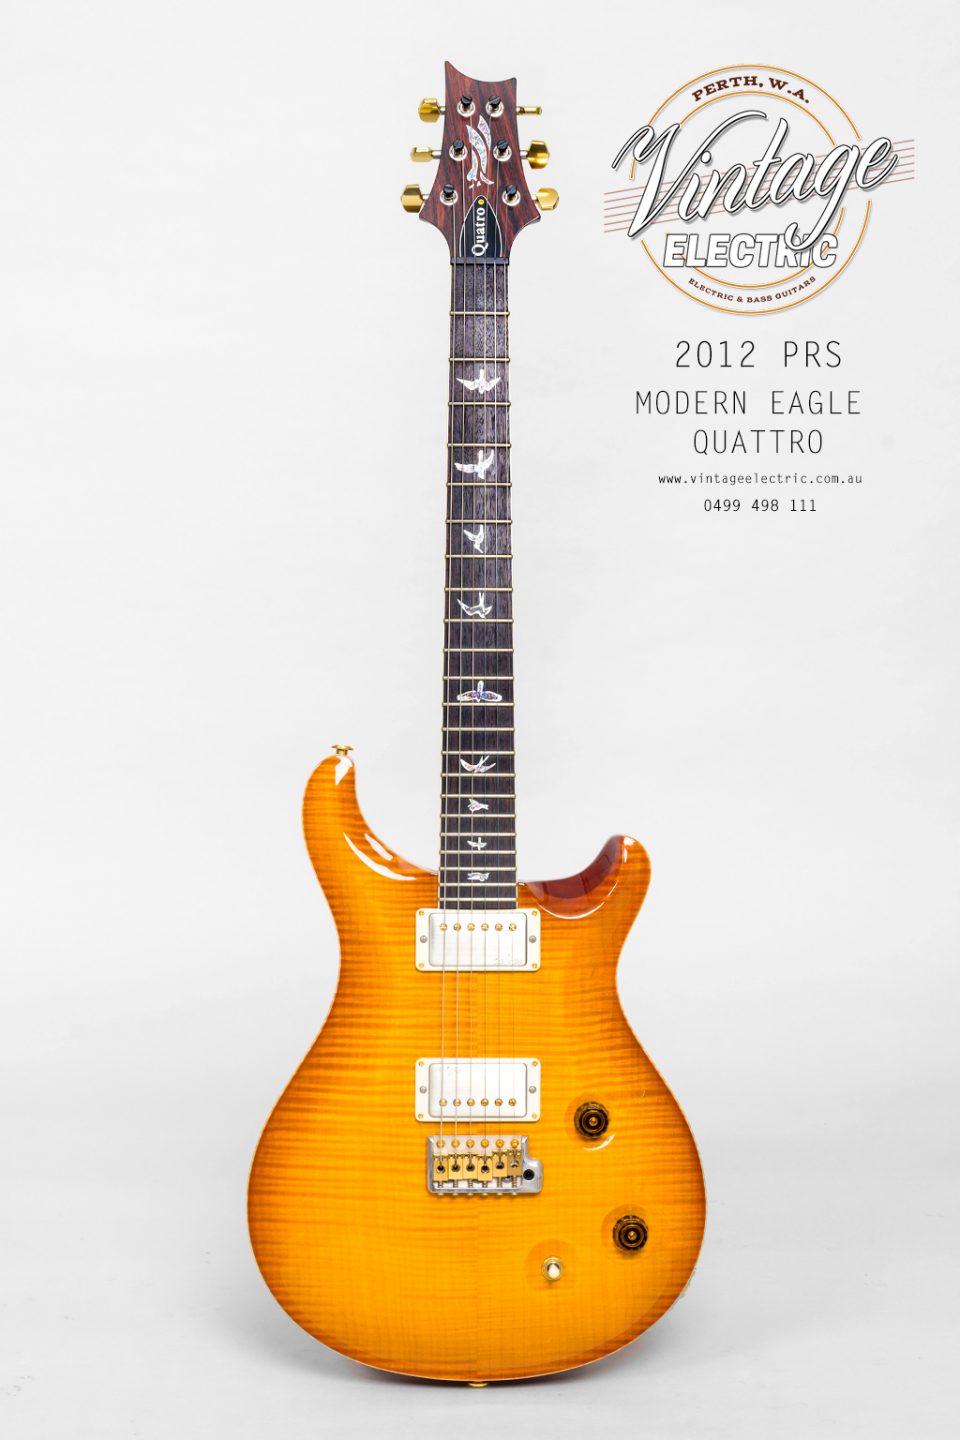 2012 PRS Modern Eagle Quattro Guitar